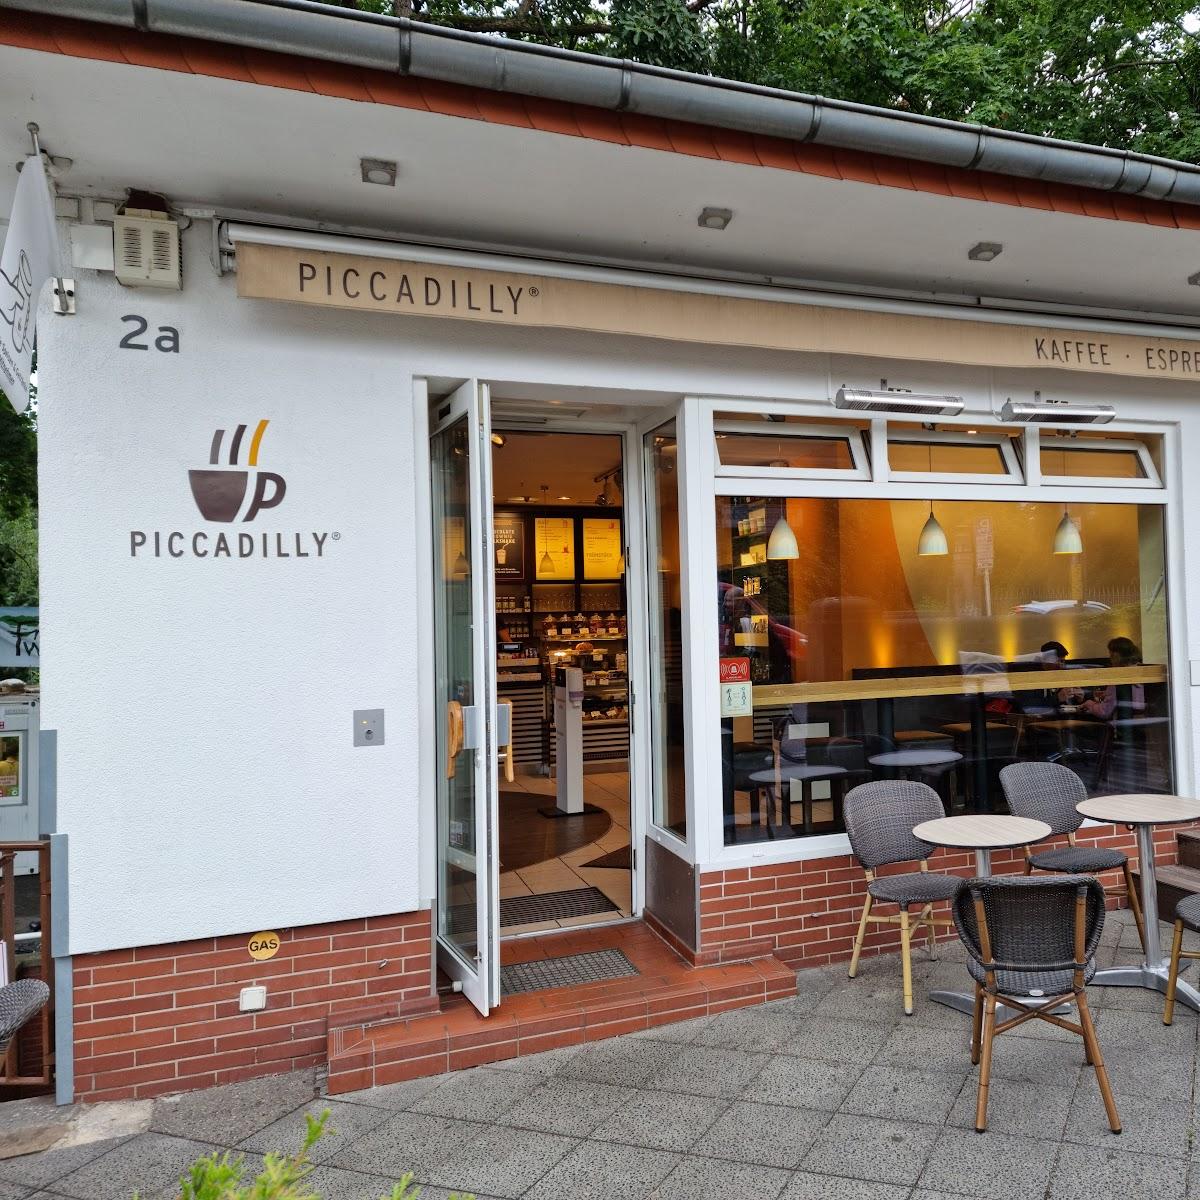 Restaurant "Piccadilly" in Berlin